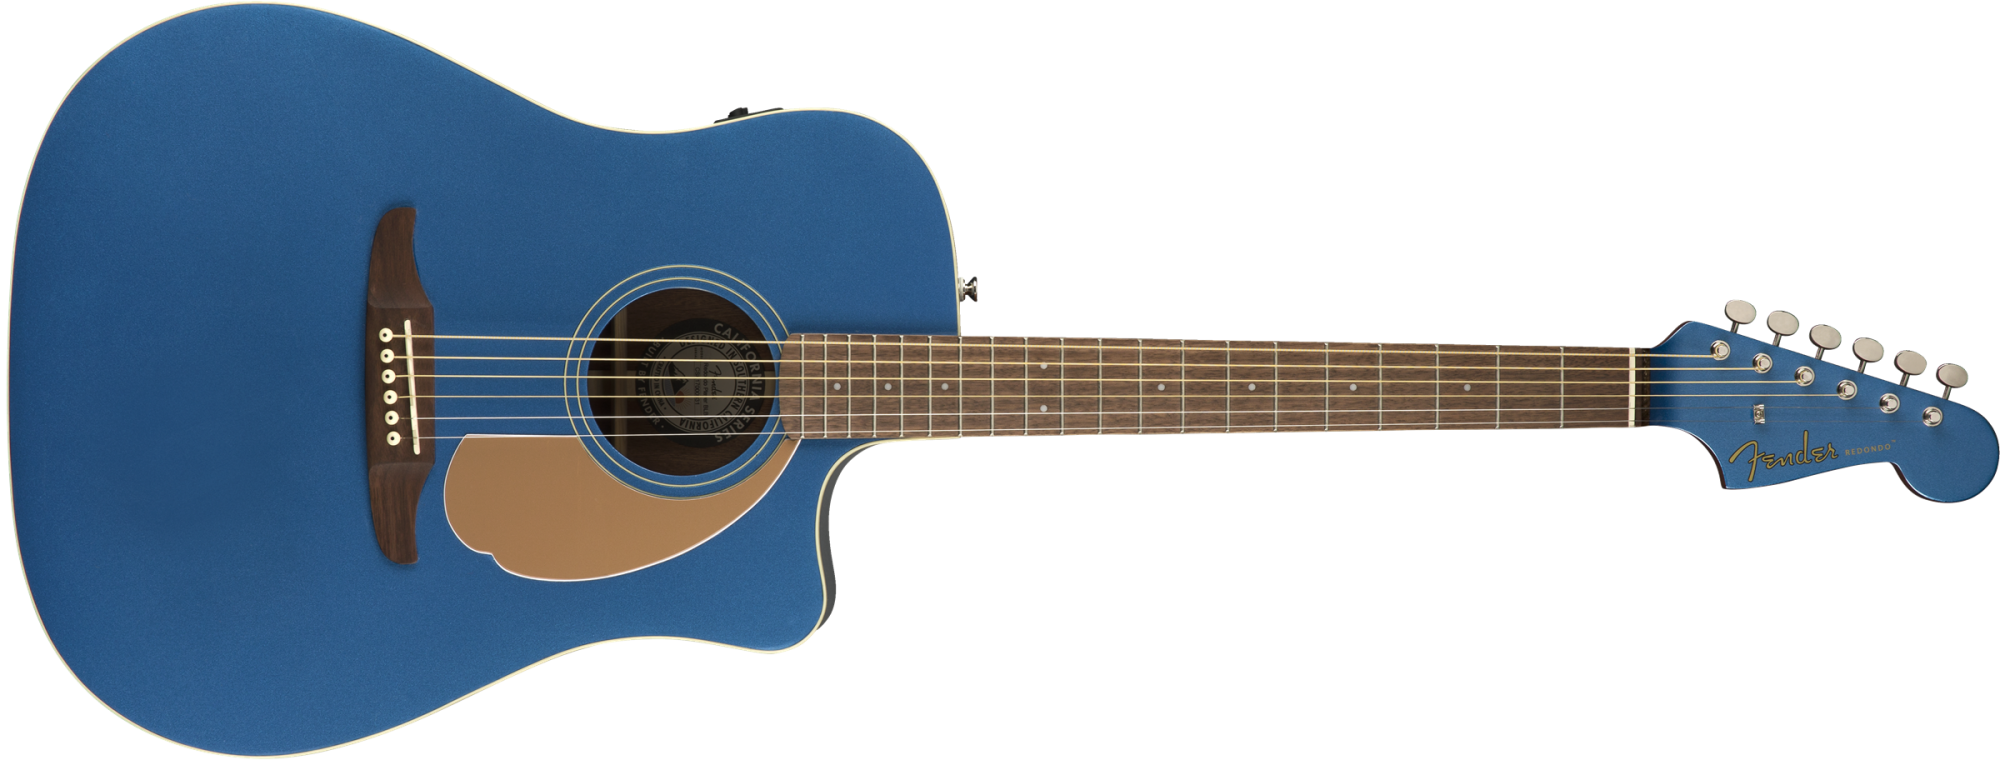 Acoustic Blue Guitar PNG HD Quality